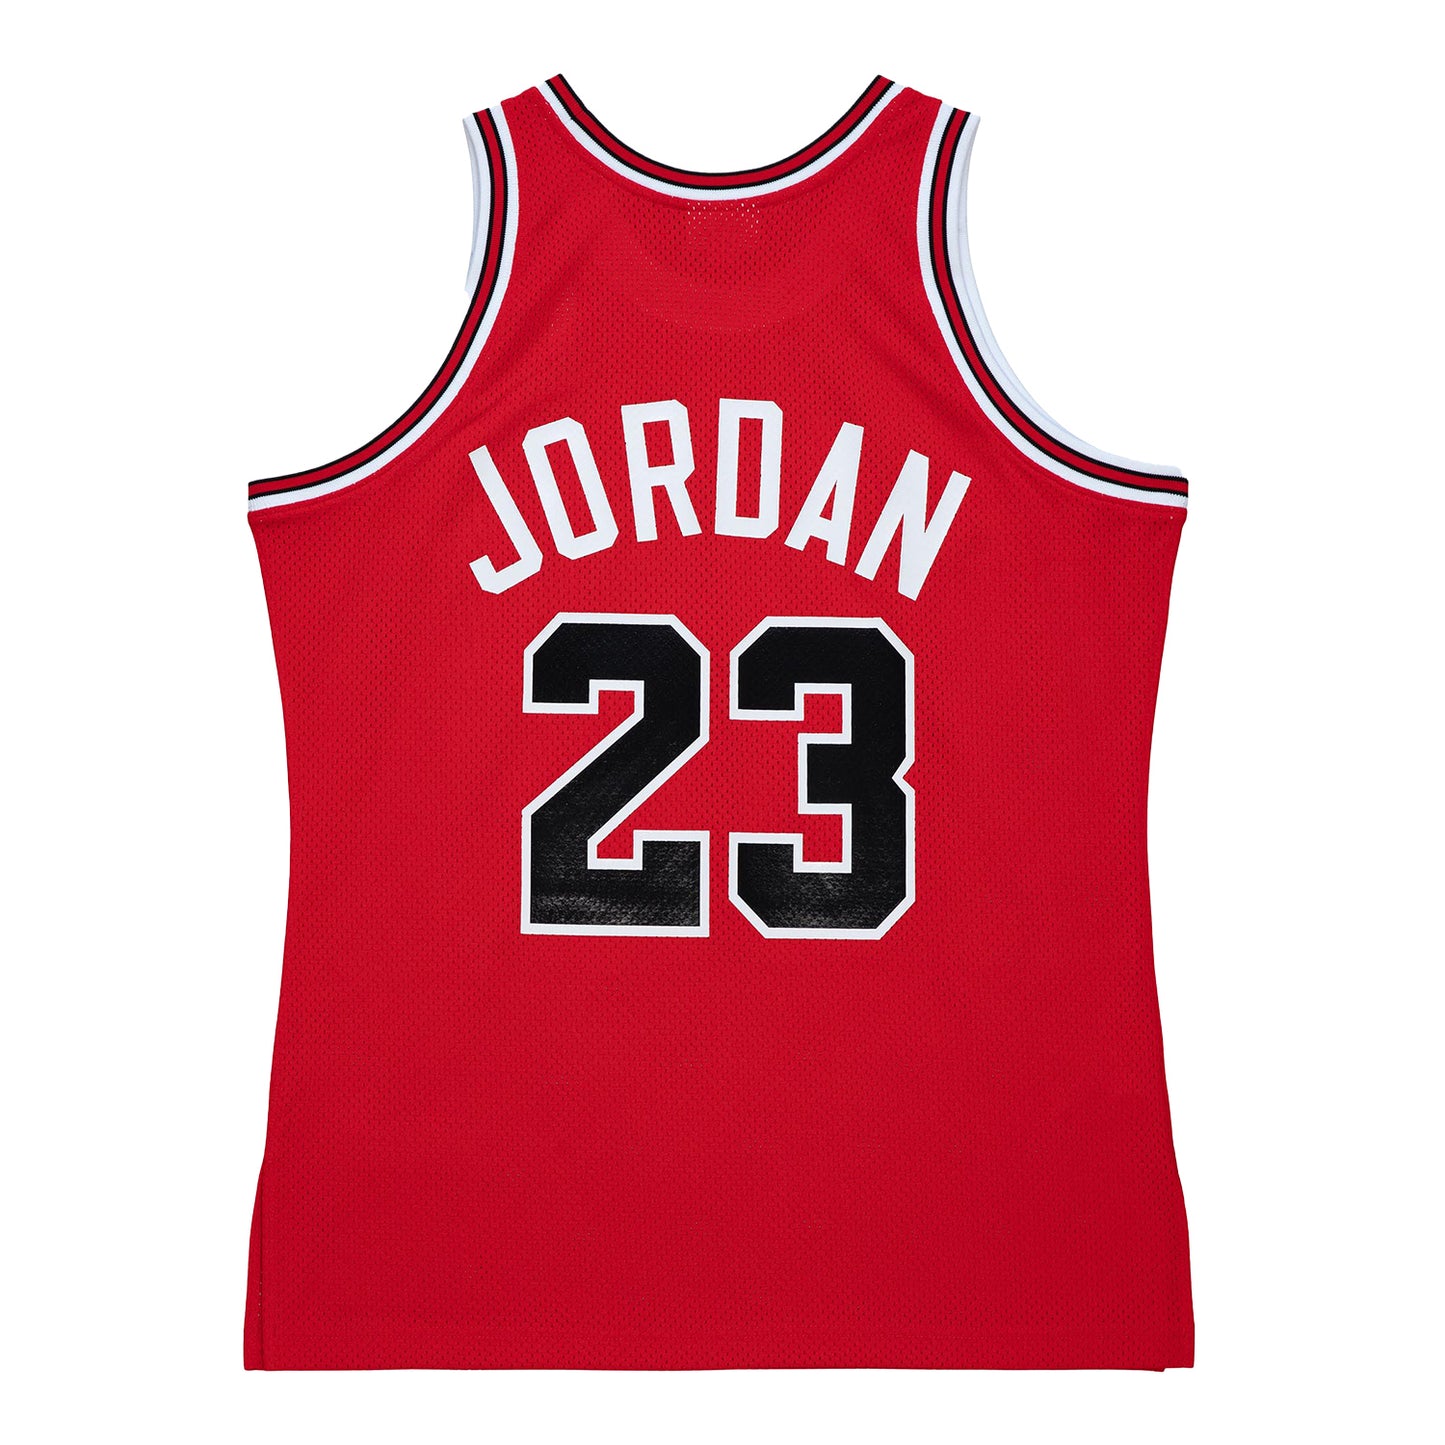 Shop Mens Jerseys - Jordan All Star 2018 & Nike x NBA Team Jerseys